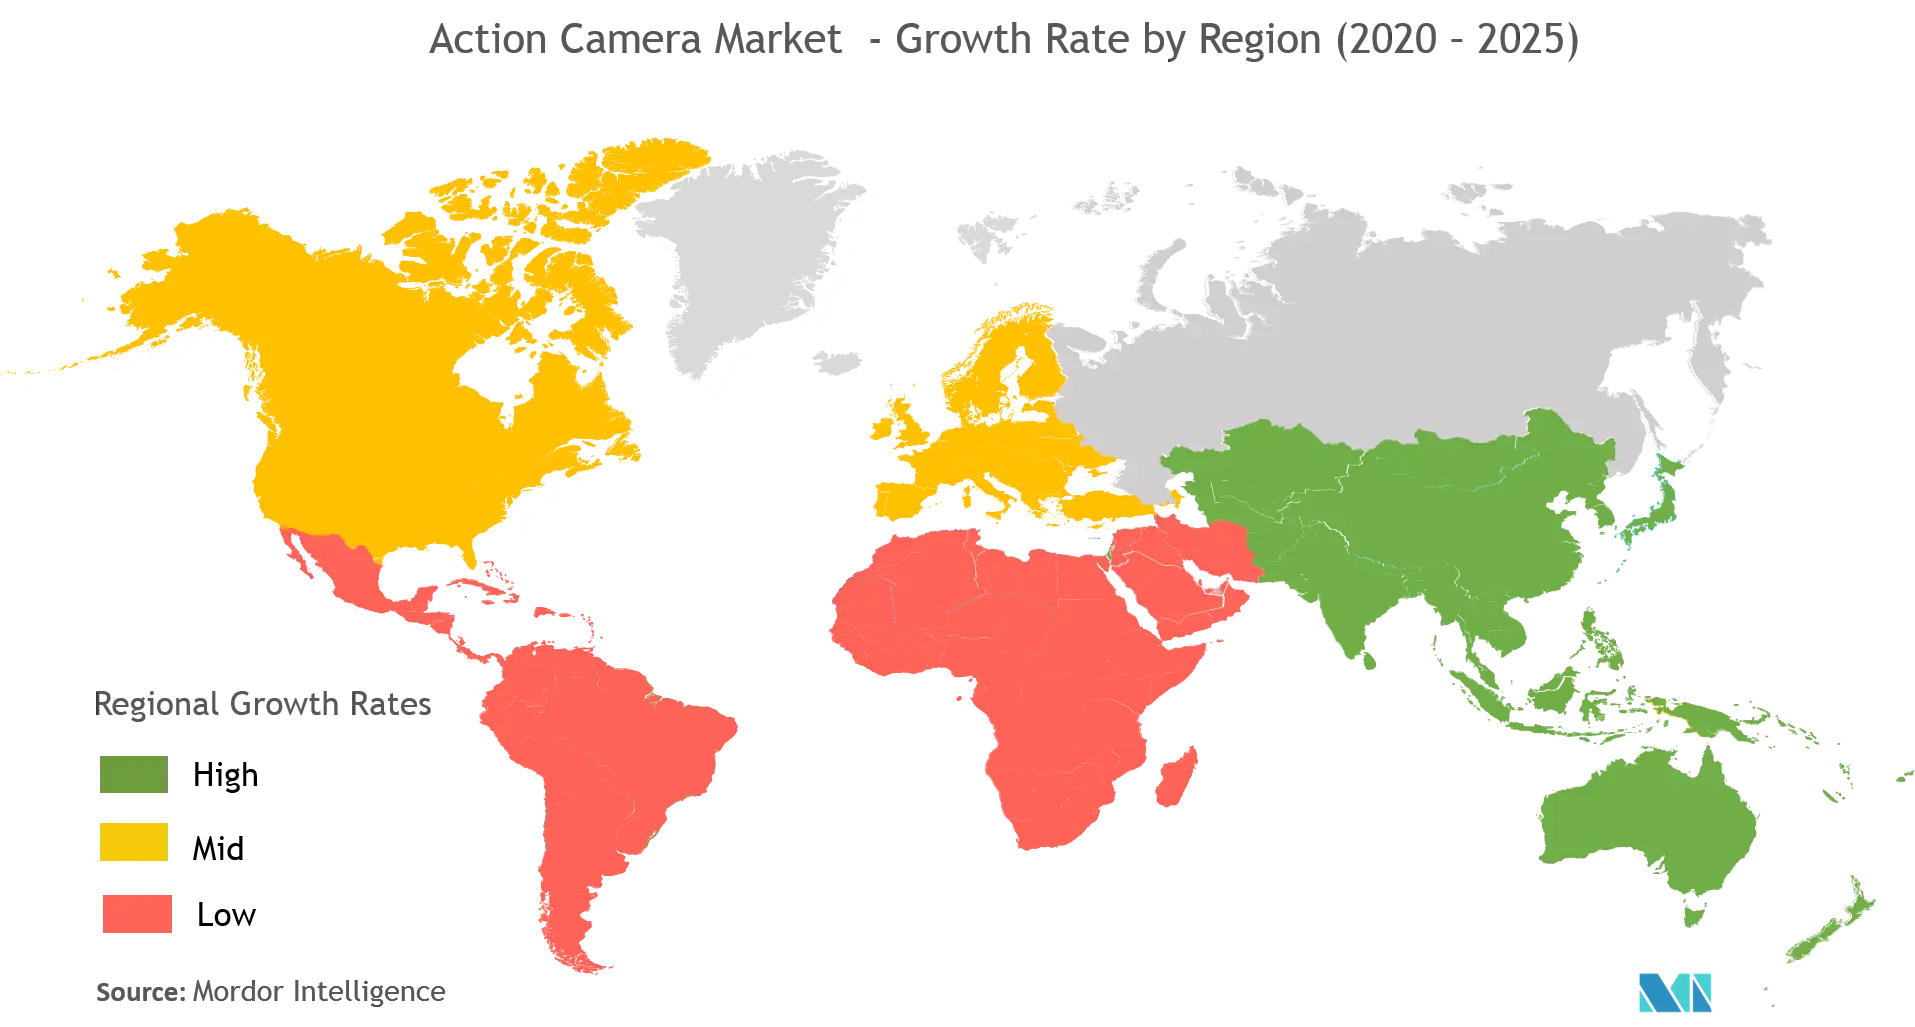 action camera market share